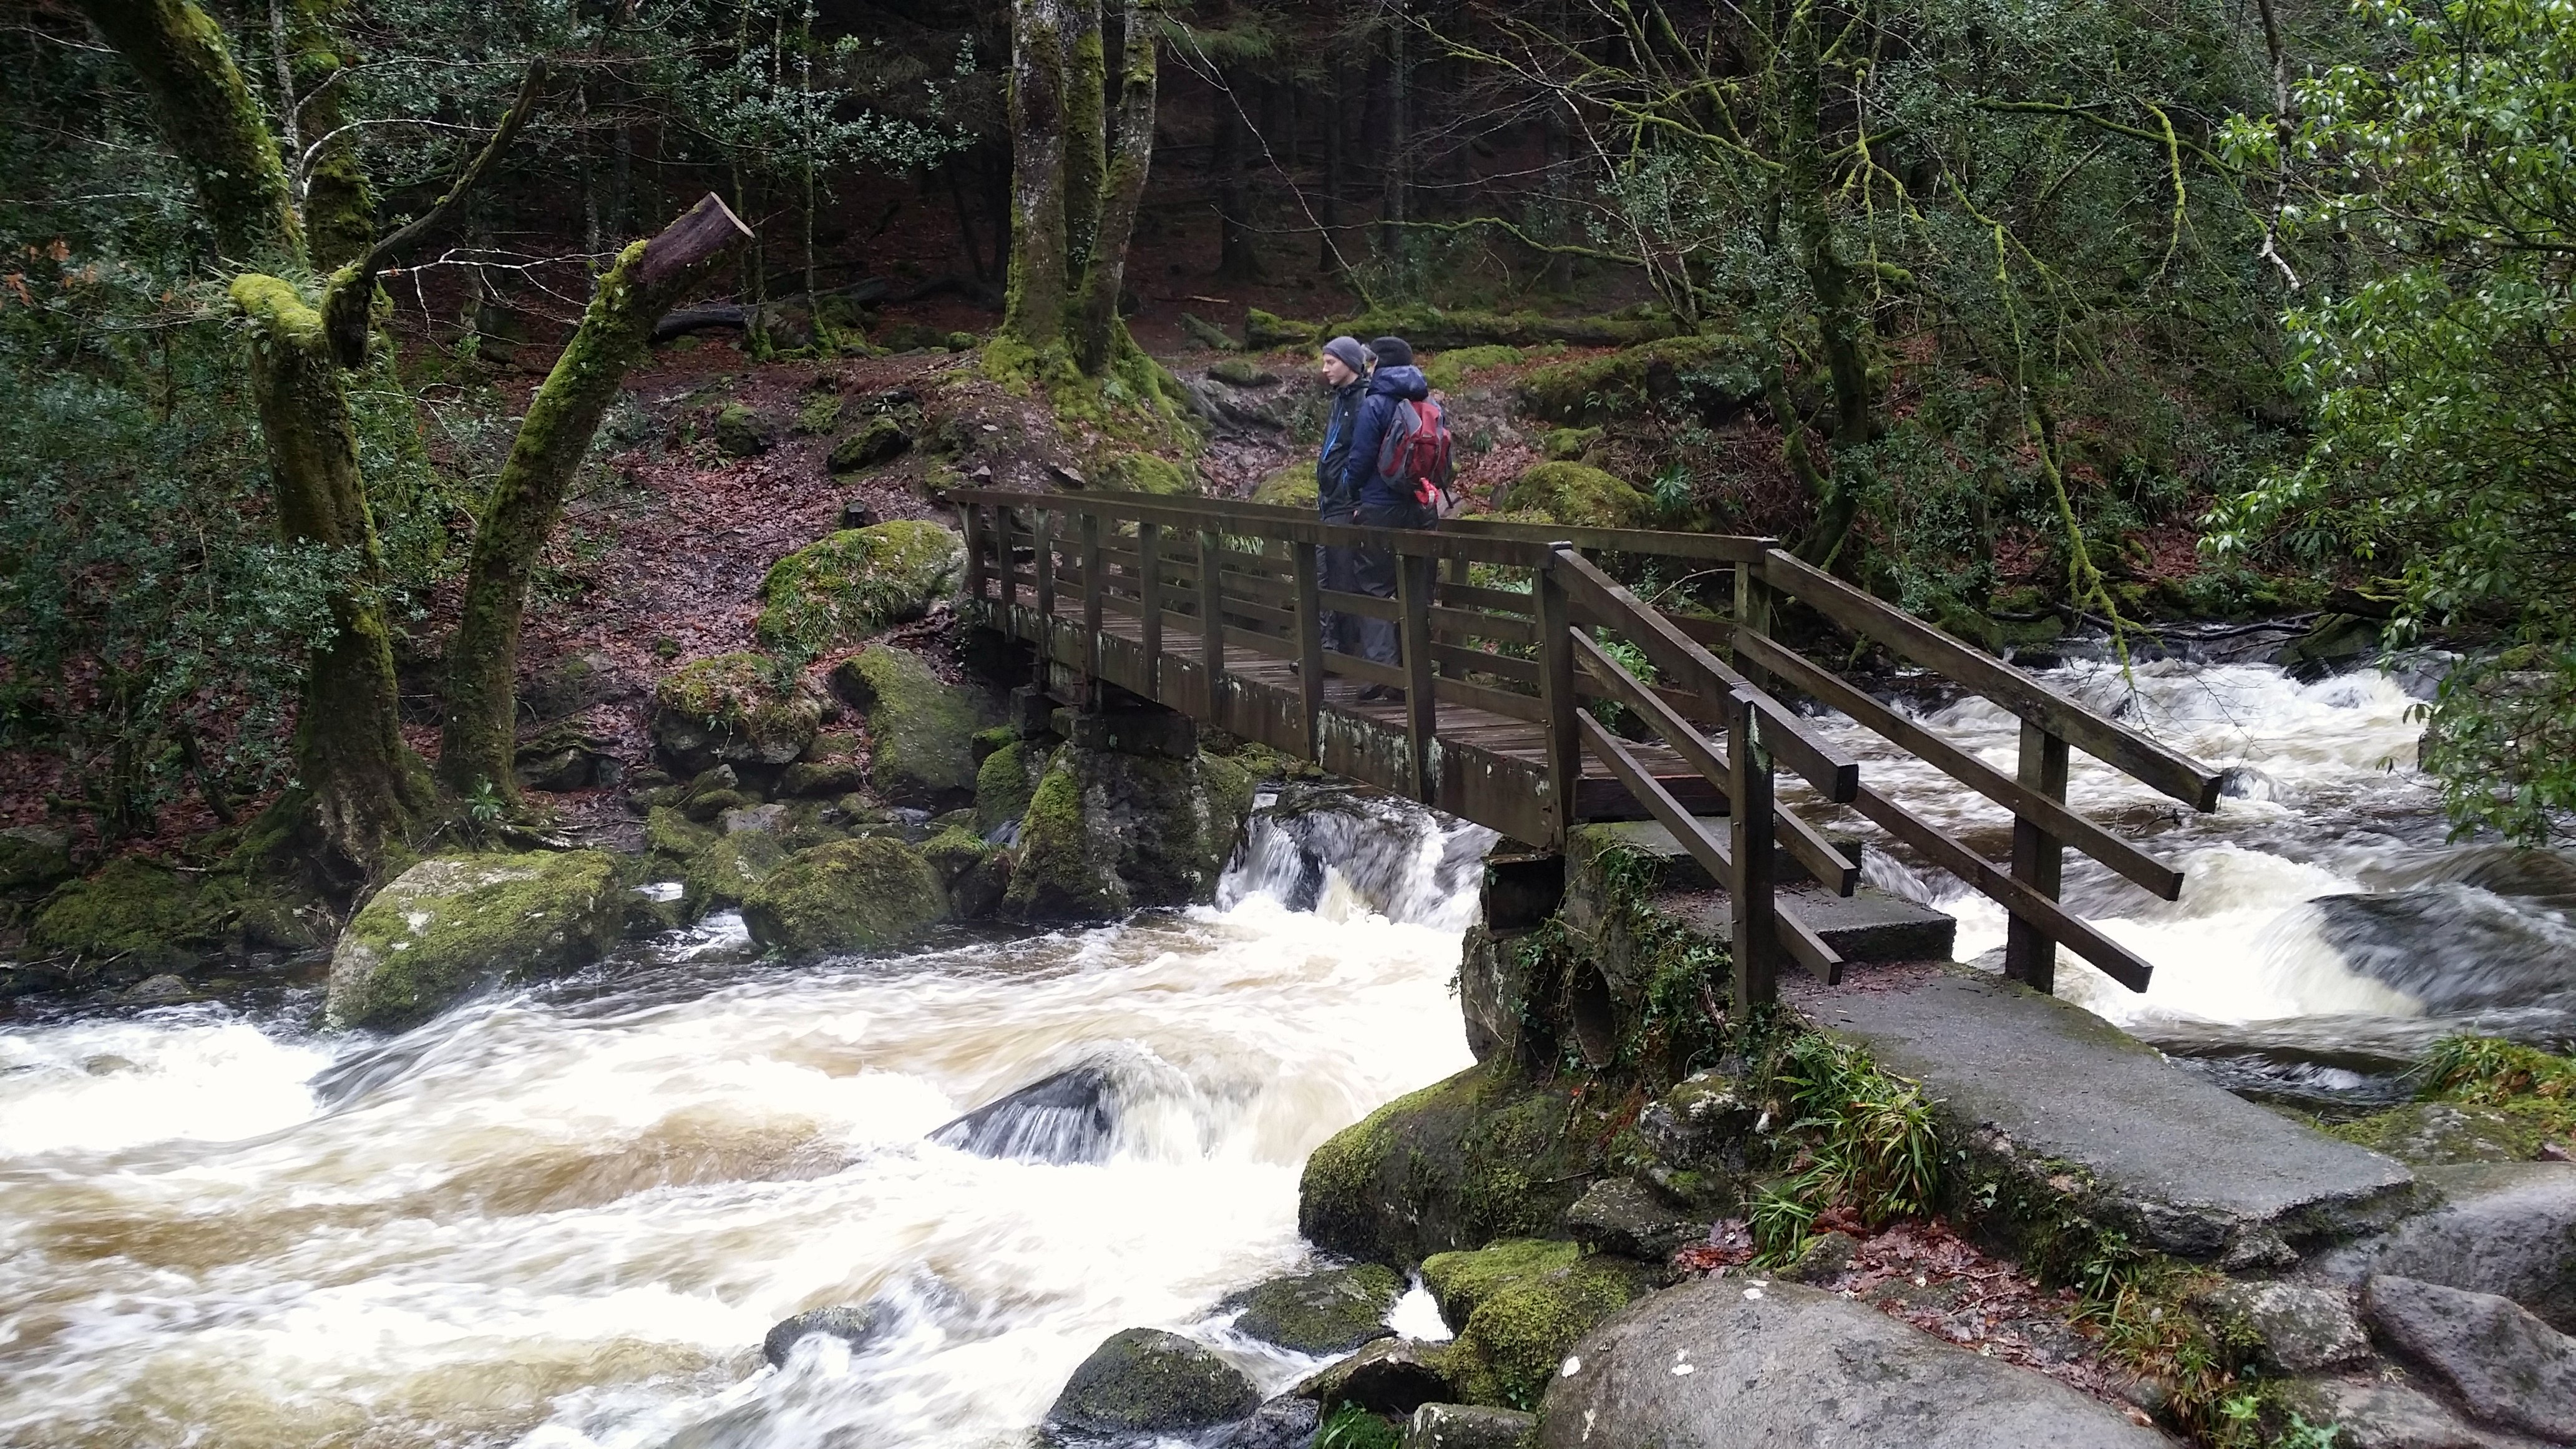 Crossing the North Teign. So @paulgbuck there is actually a bridge #dartmoor #sh